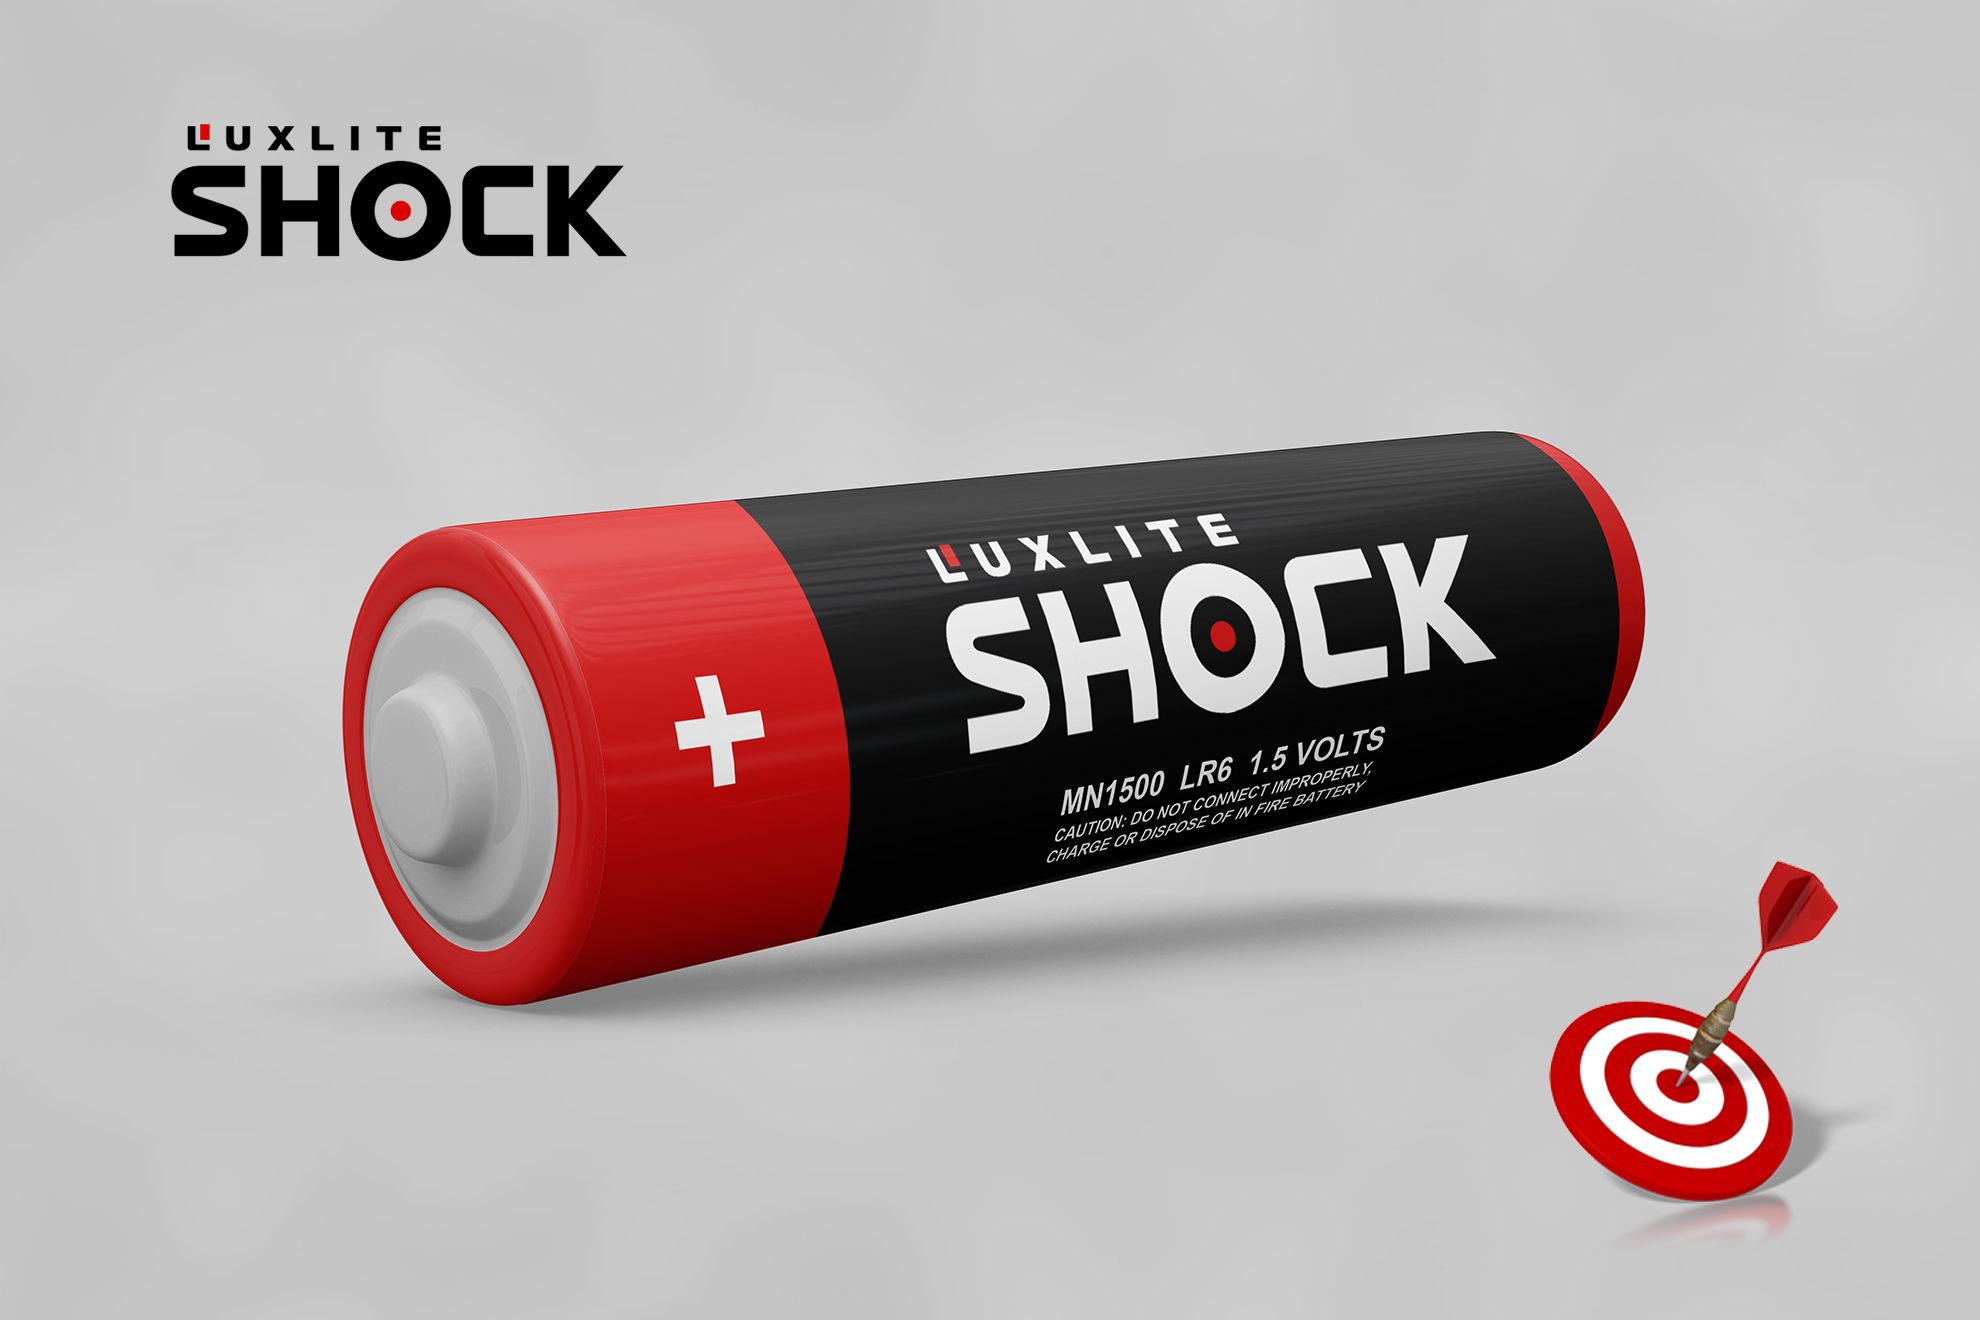 Логотип для батареек LUXLITE SHOCK - дизайнер JMarcus